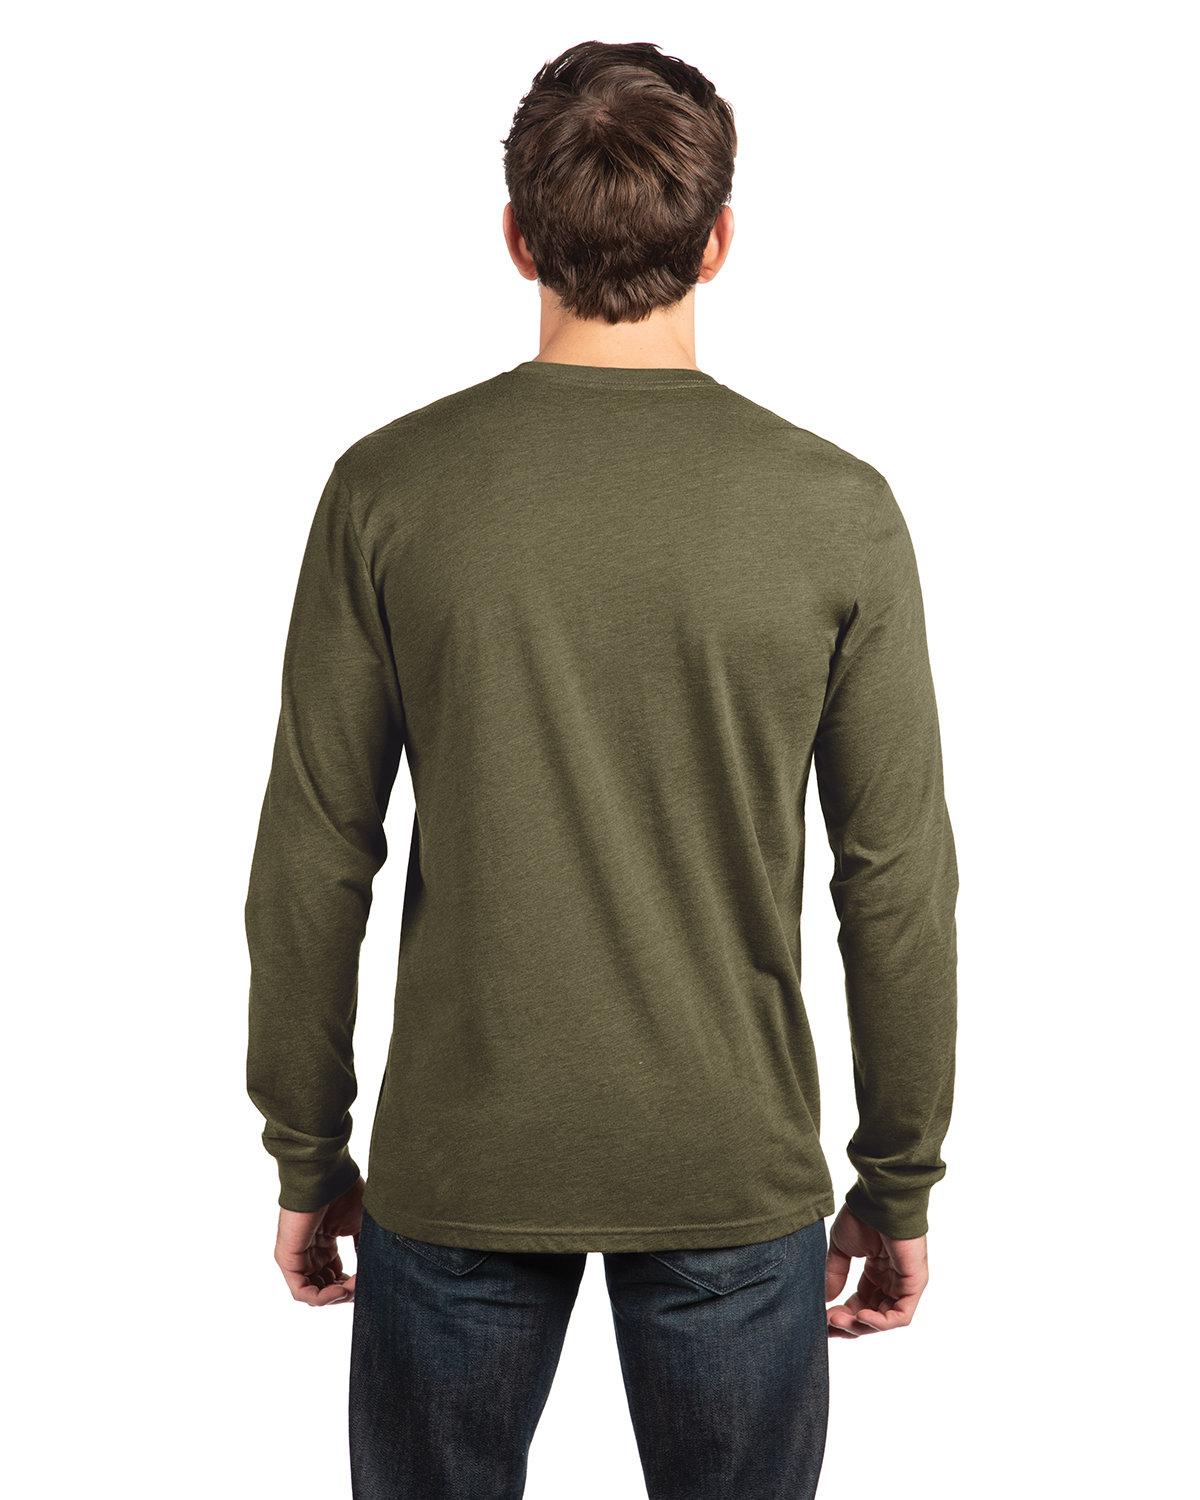 Next Level Apparel Unisex CVC Long-Sleeve T-Shirt | Generic Site - Priced